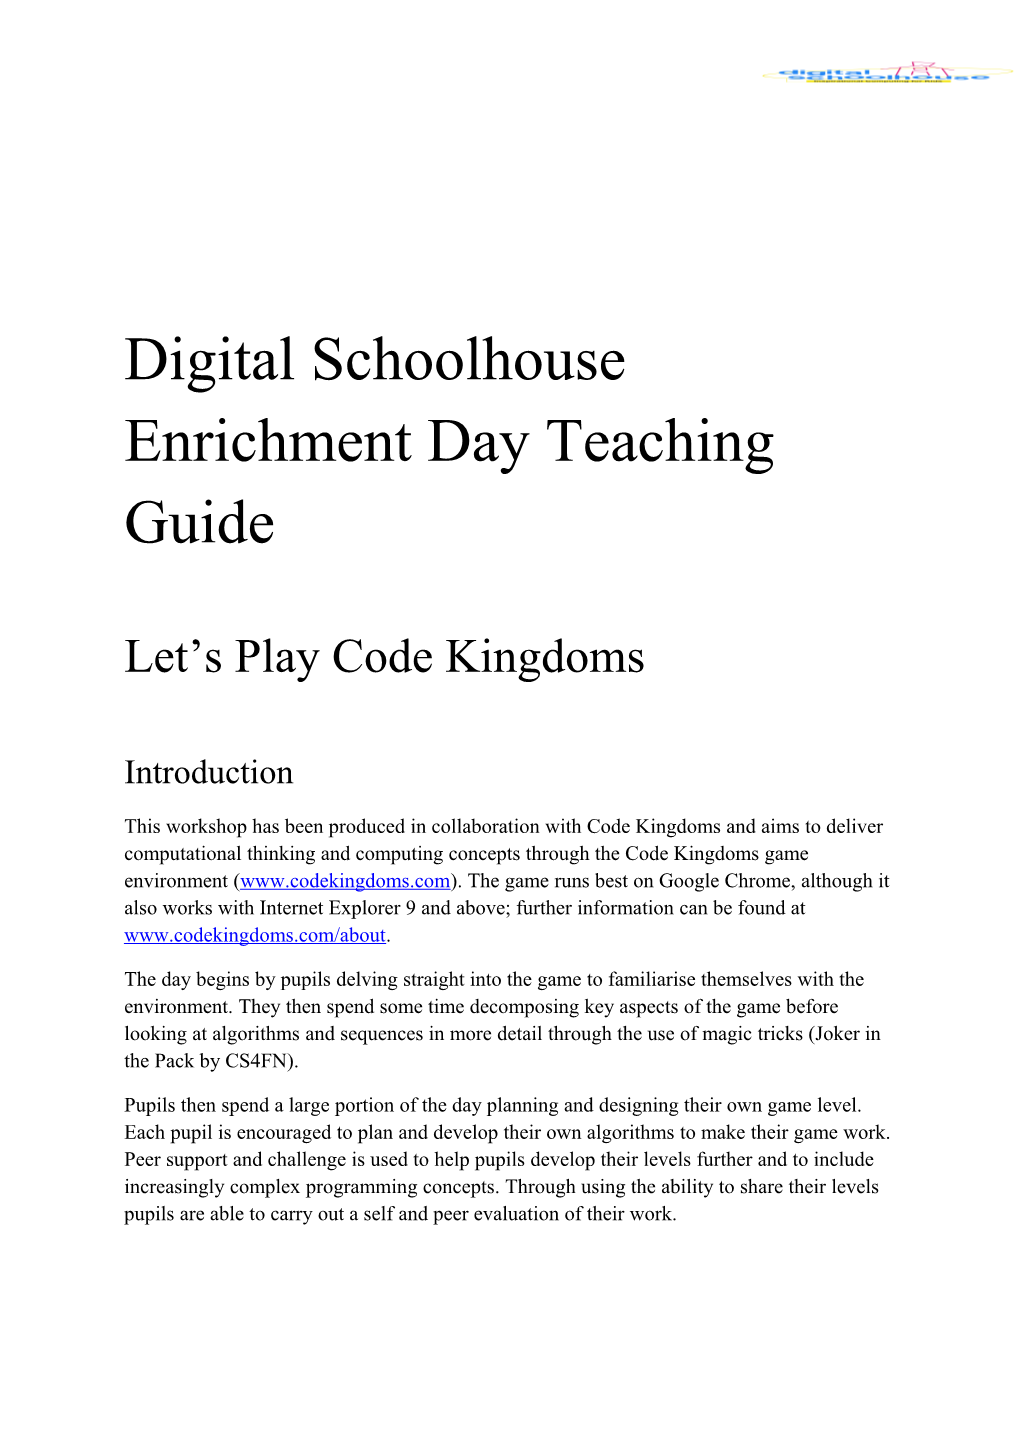 Digital Schoolhouse Enrichment Day Teaching Guide